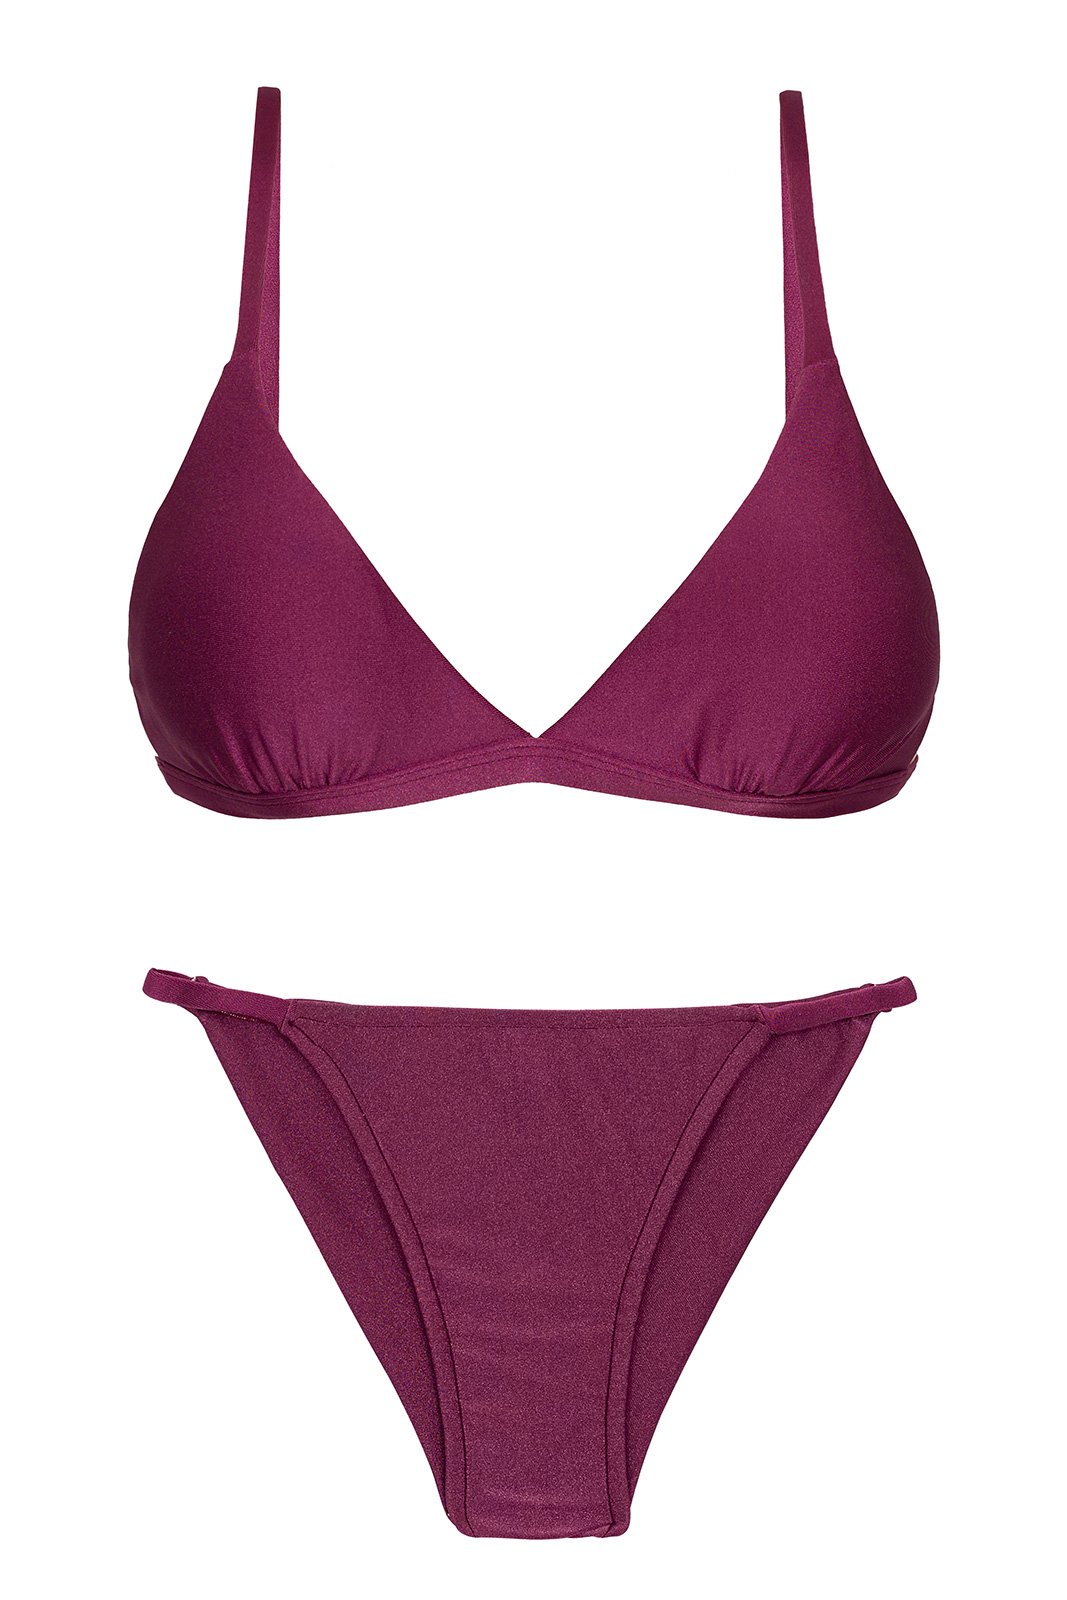 Iridescent Purple Cheeky Brazilian Bikini With Thin Sides Set Viena